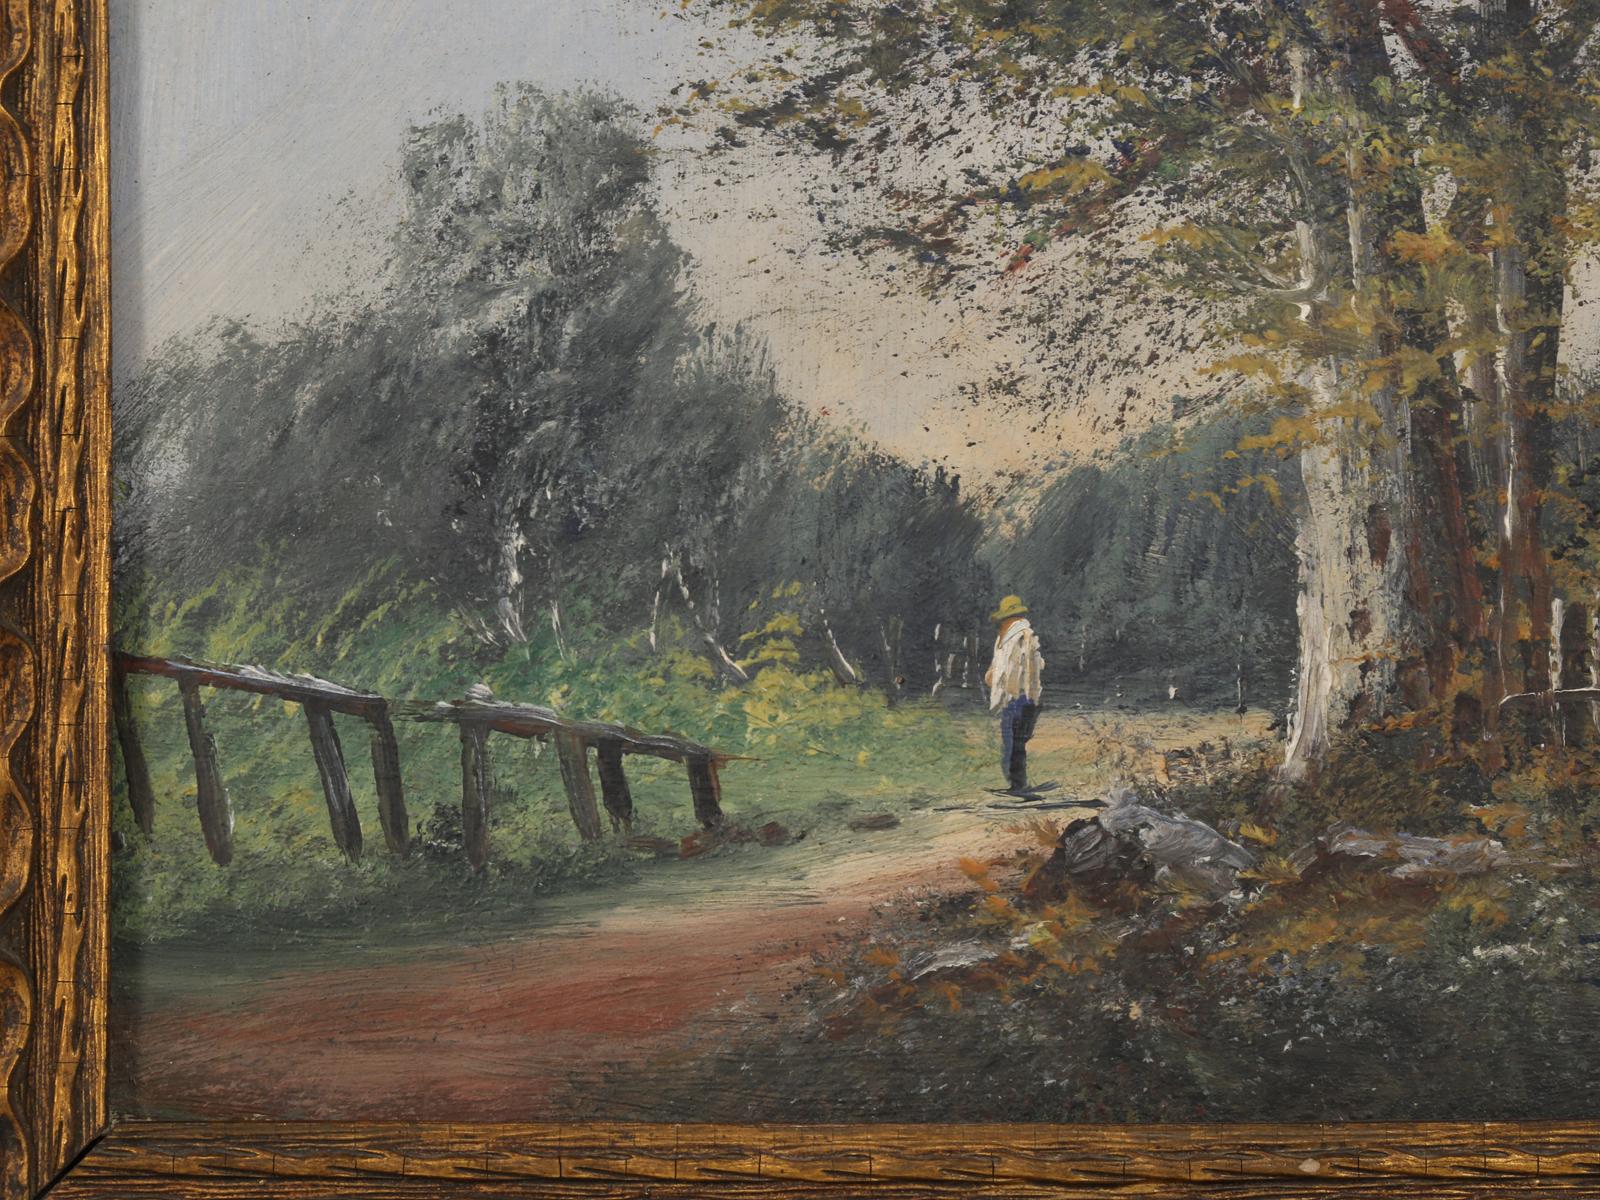 Antique French Landscape Oil Painting on Linen Signed Baldy, Original Gilt Frame For Sale 2